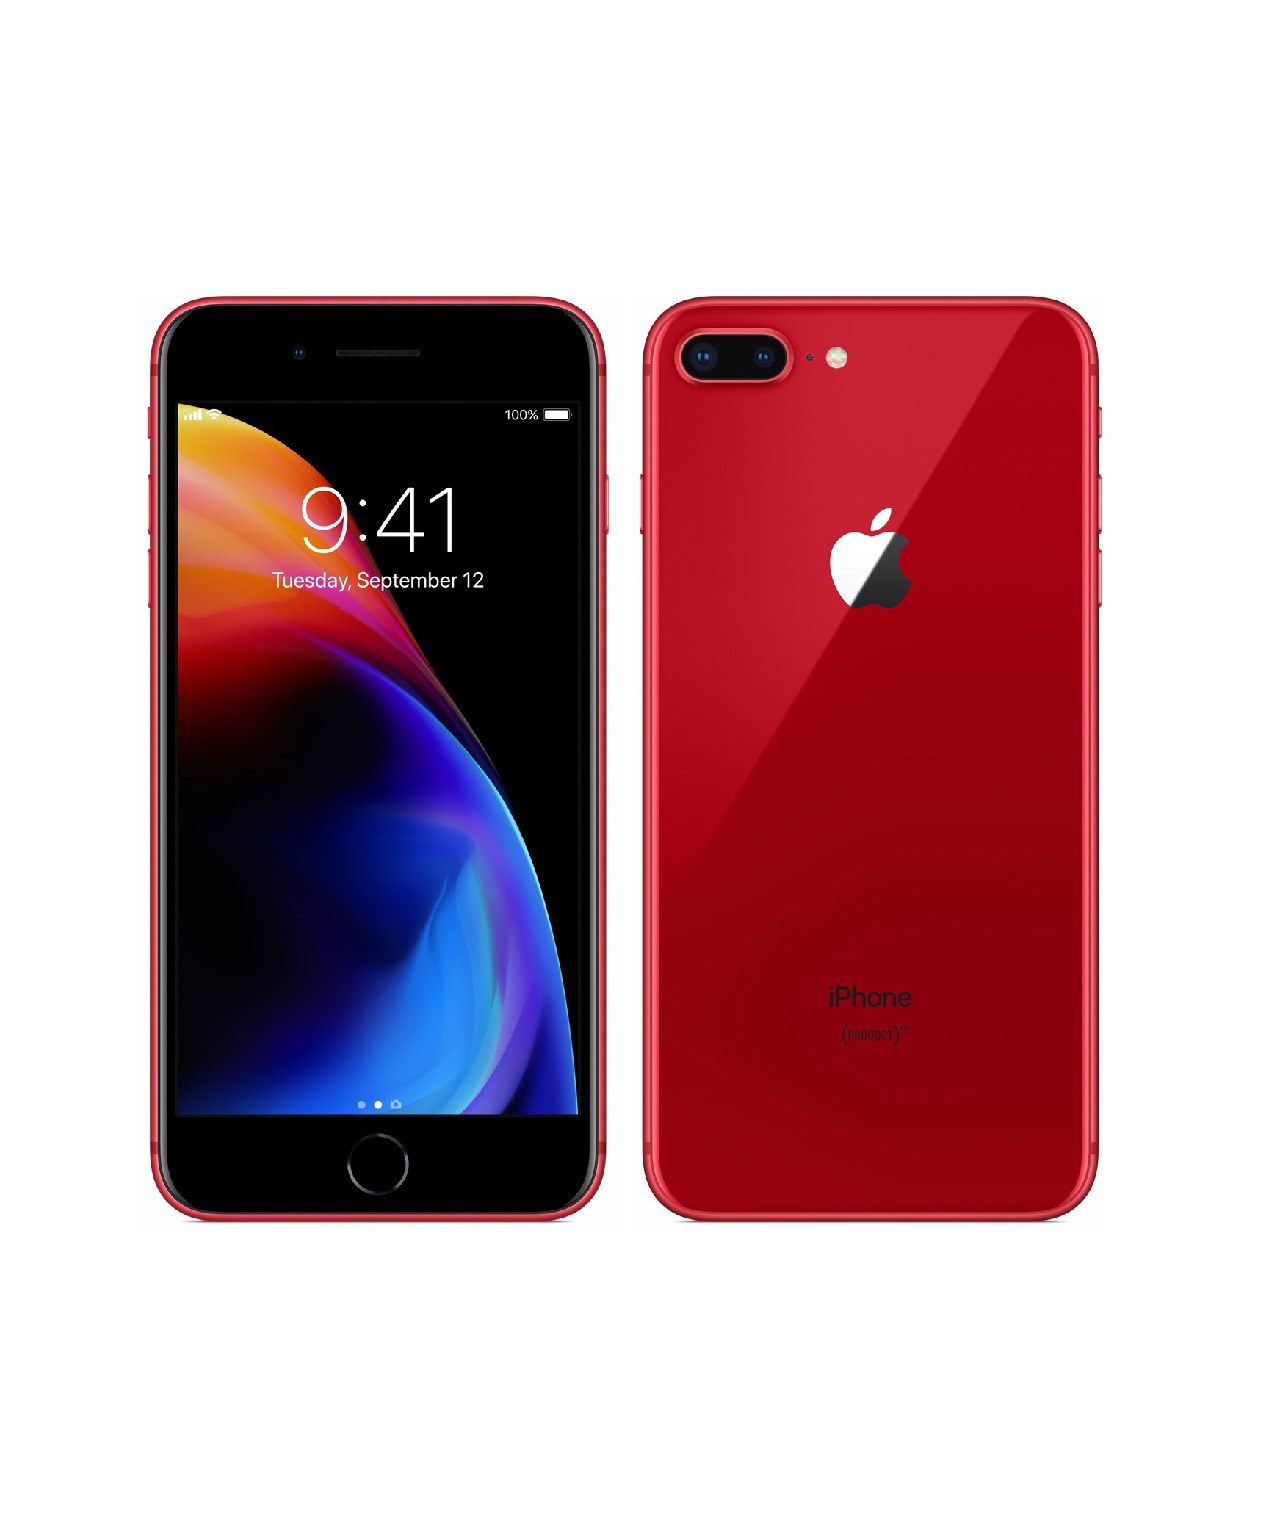 kulstof Solrig Lykkelig Apple iPhone 8 Plus 256GB RED MRT82LL/A Apple A11 Bionic Retina IPS Gsm  Unlocked Phone Smartphone, 78.1x158.4x7.5 mm, iOS, Apple A11 Bionic APL1072  / APL1W72 (T8015), 3.00 GiB RAM, 256.0 GB ROM,